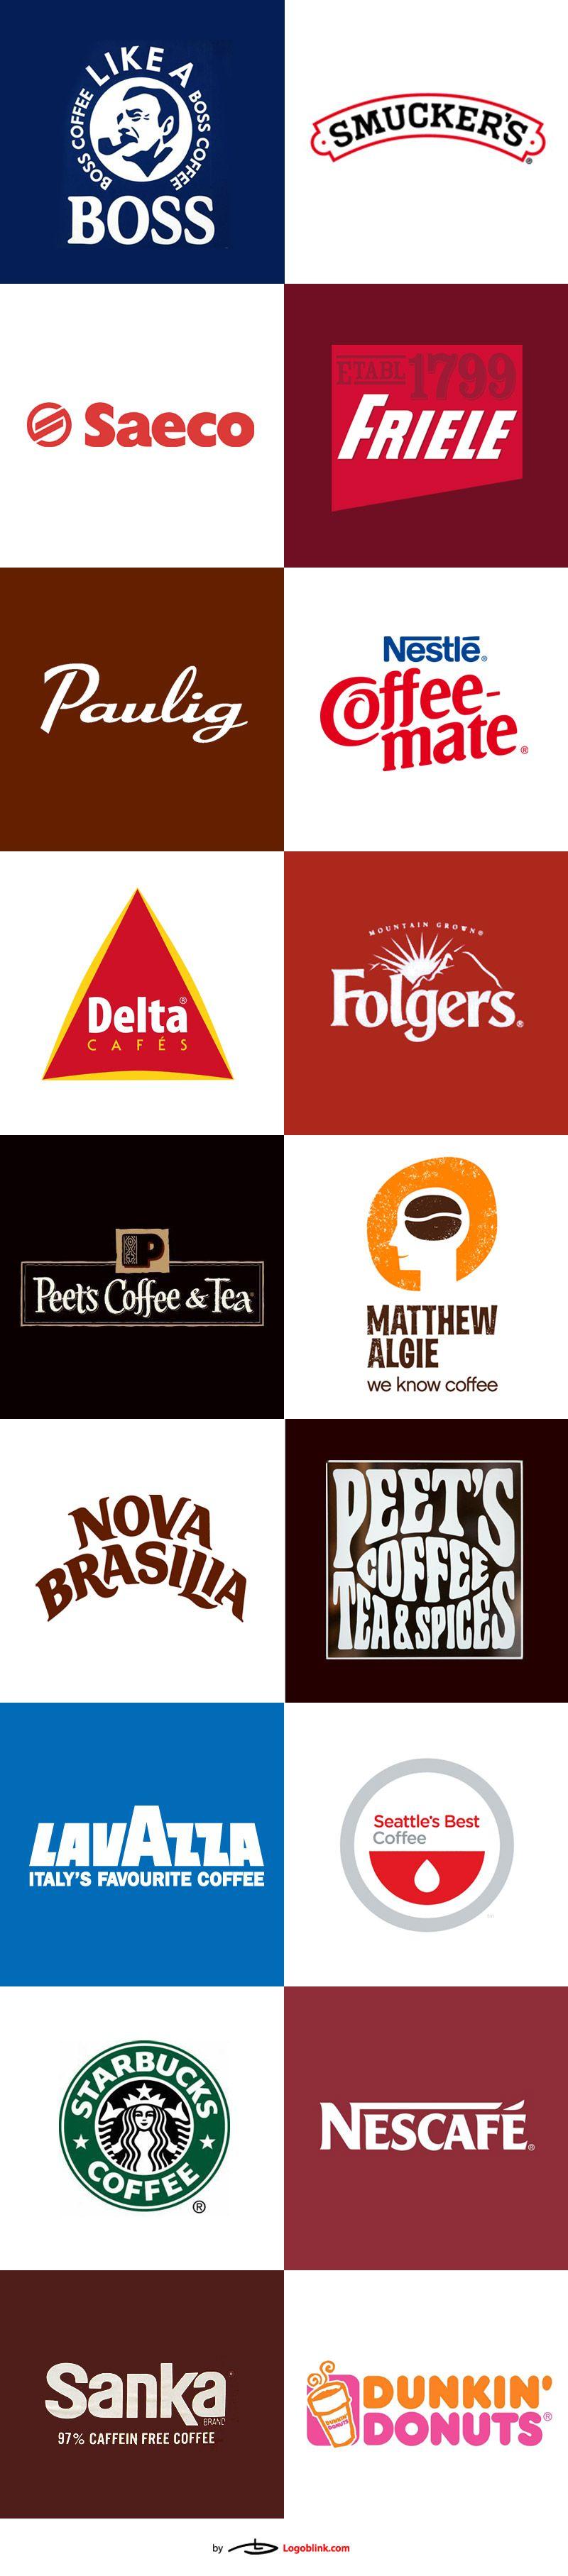 Coffee Brand Logo - 36 Famous coffee logos from around the world. | Design | Coffee logo ...